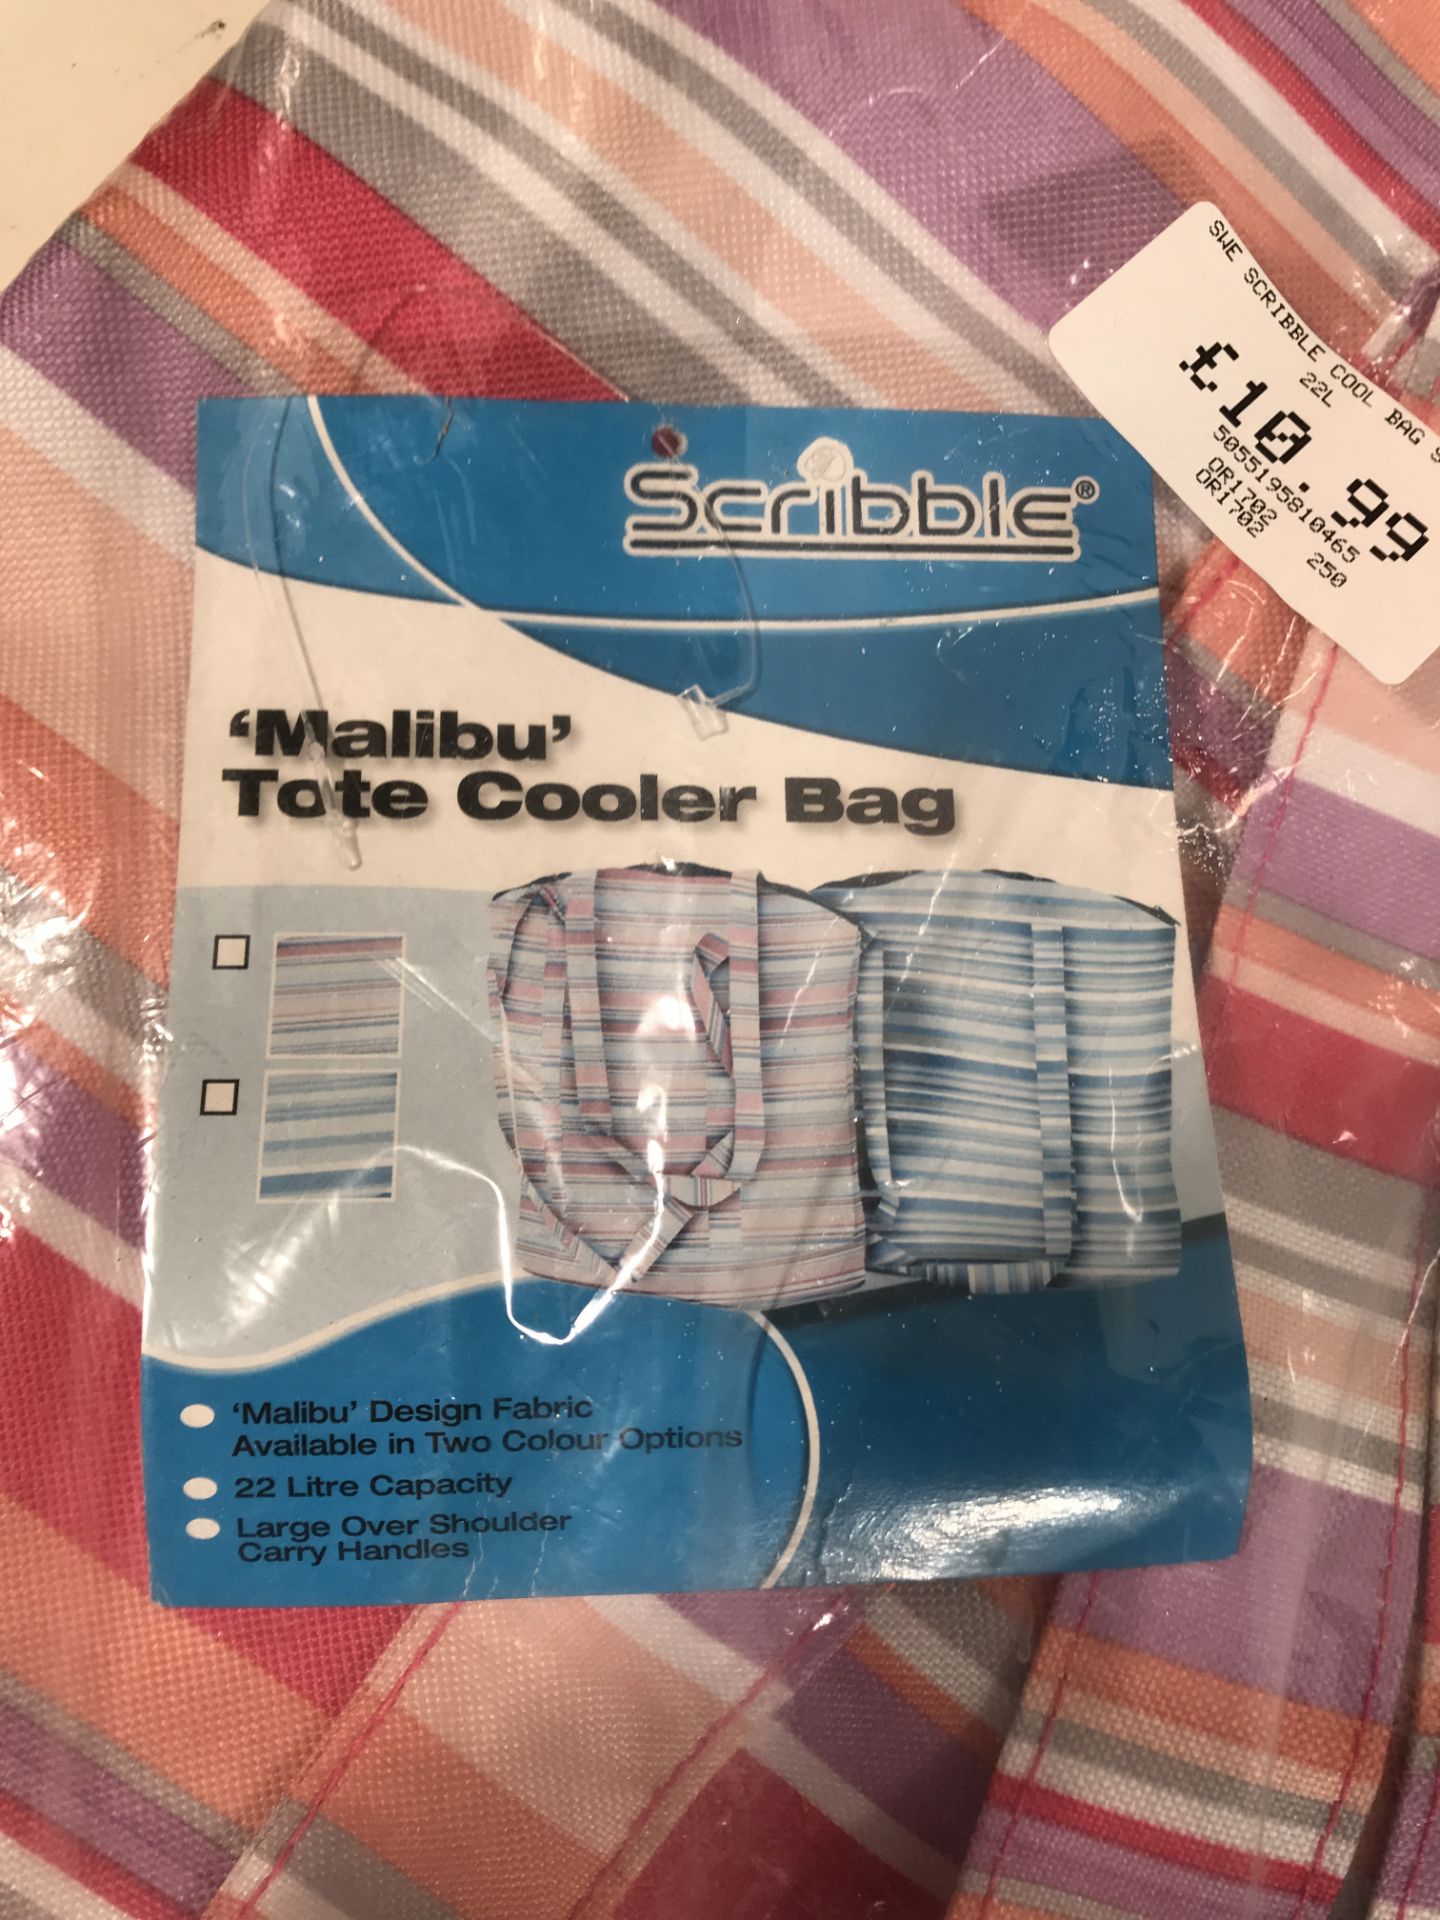 Malibu' Tote Cooler Bag - Image 2 of 3